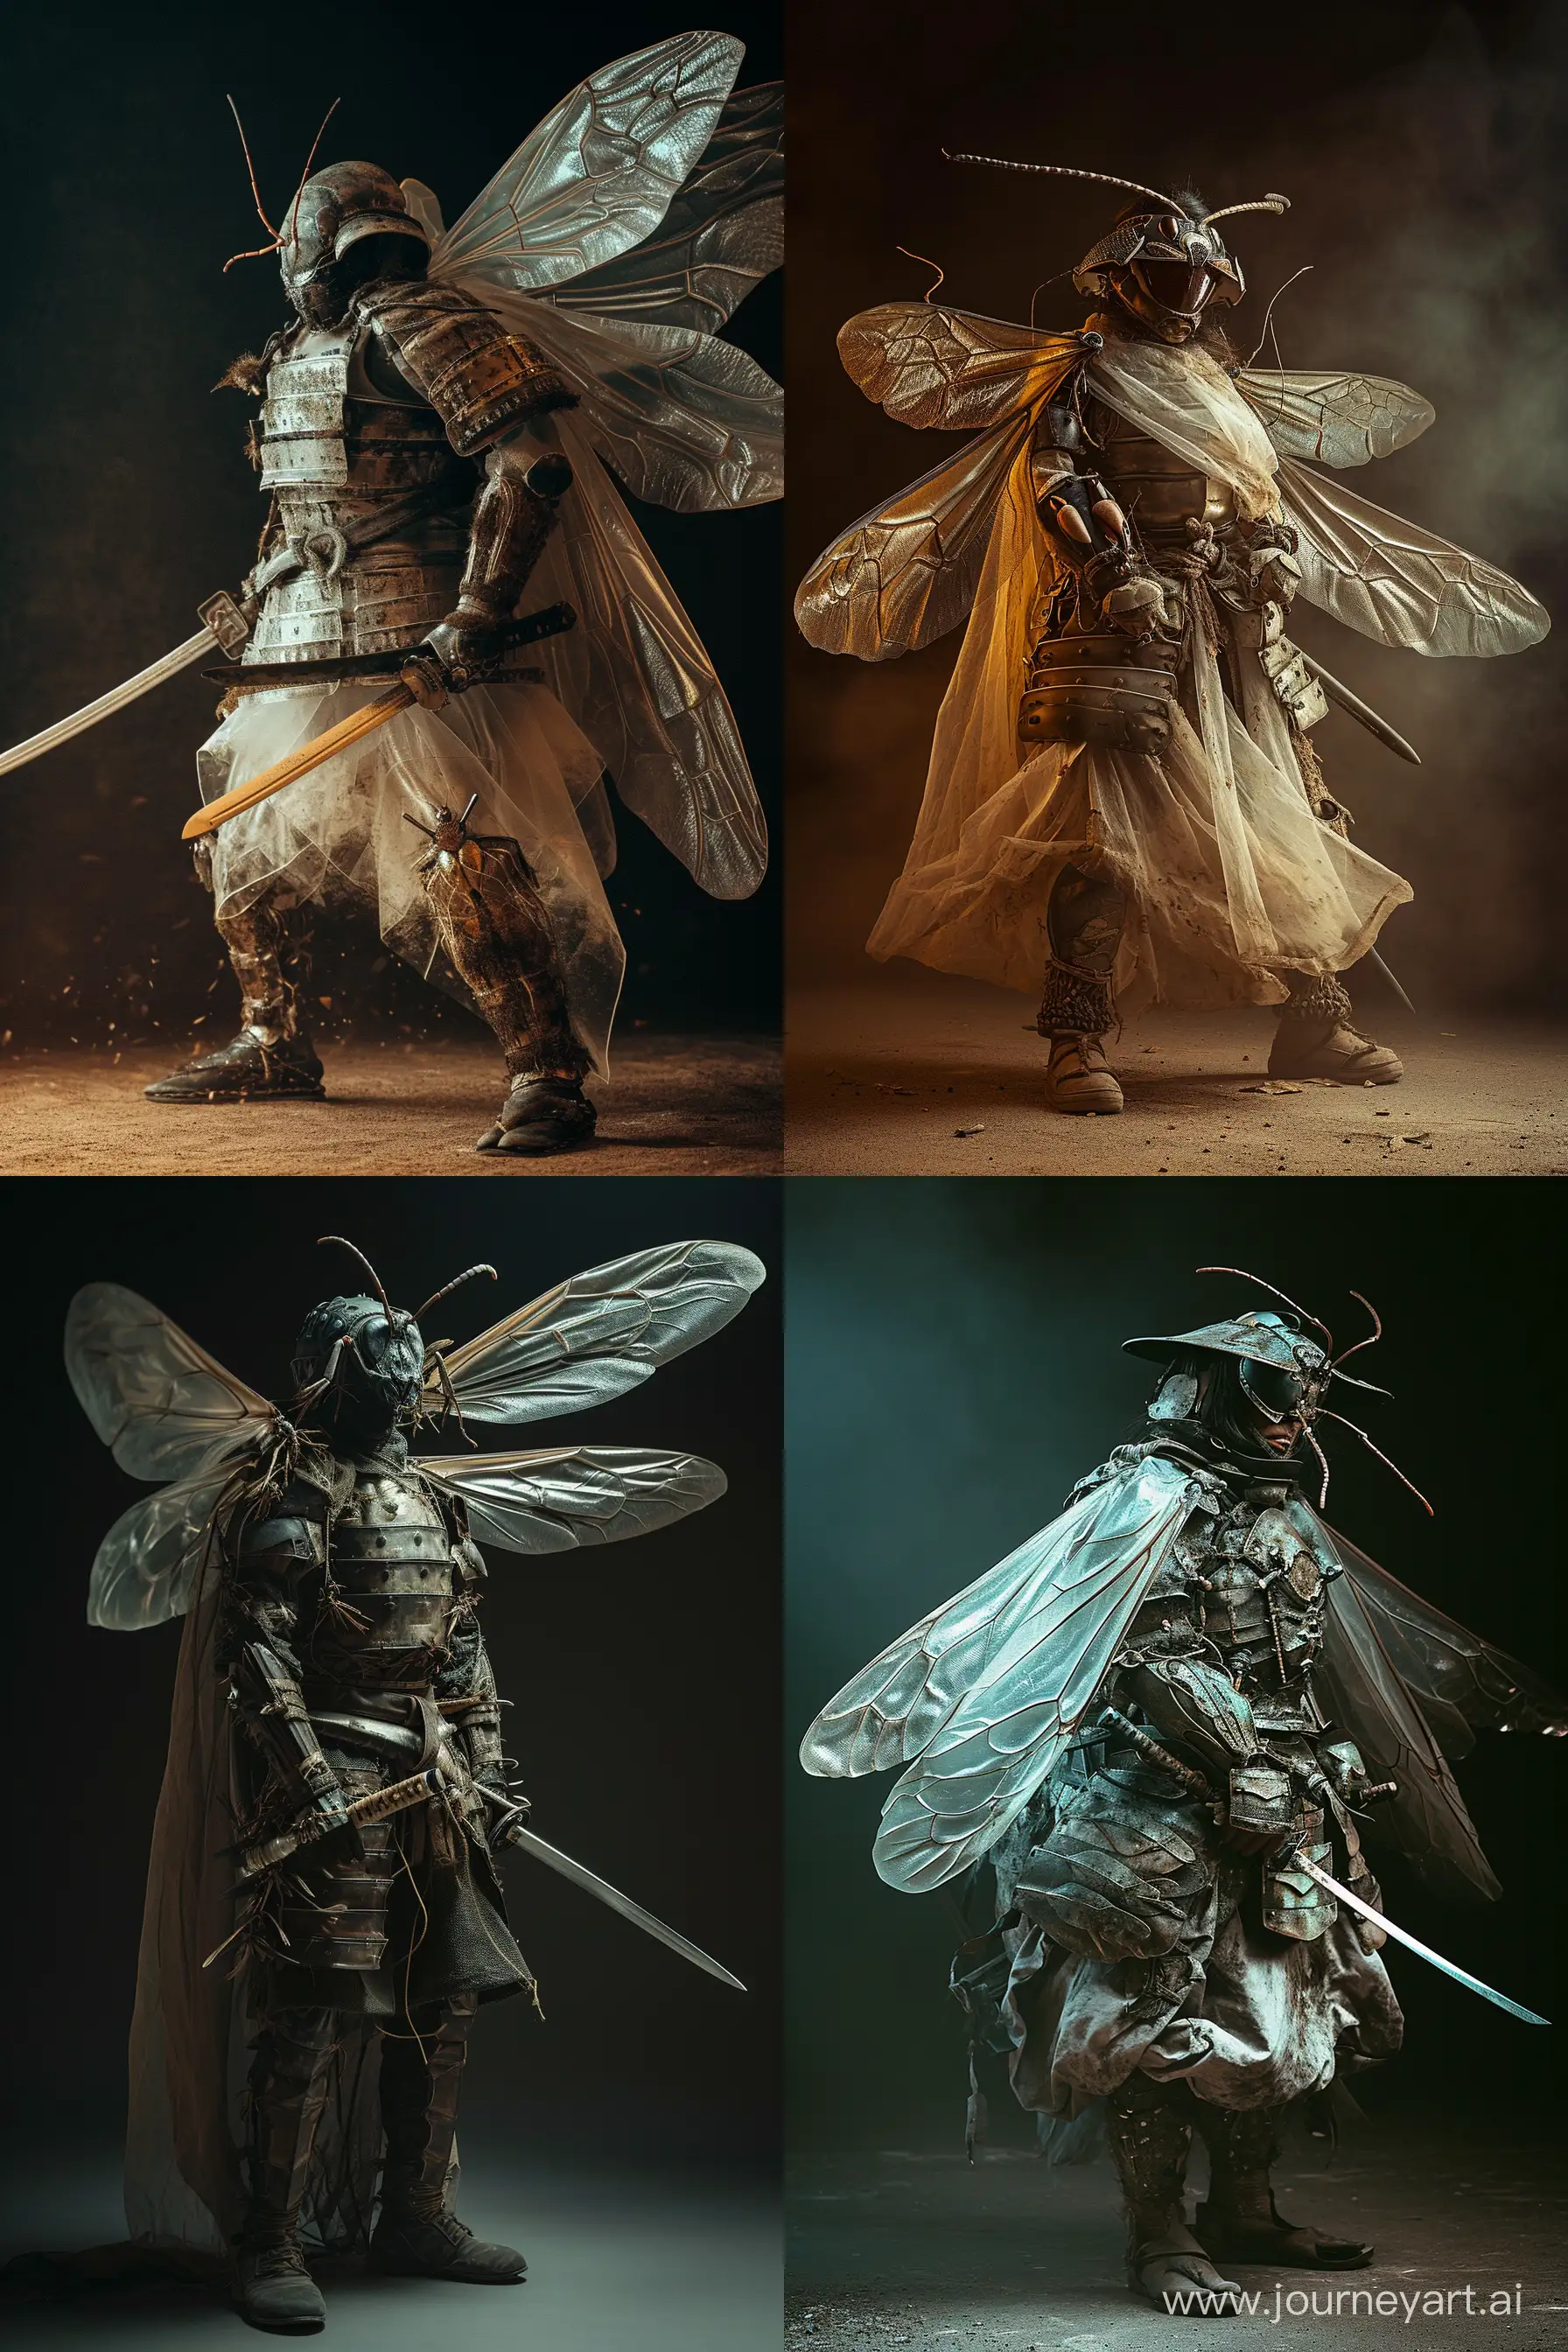 Stoic-Samurai-Warrior-in-Translucent-Insectoid-Armor